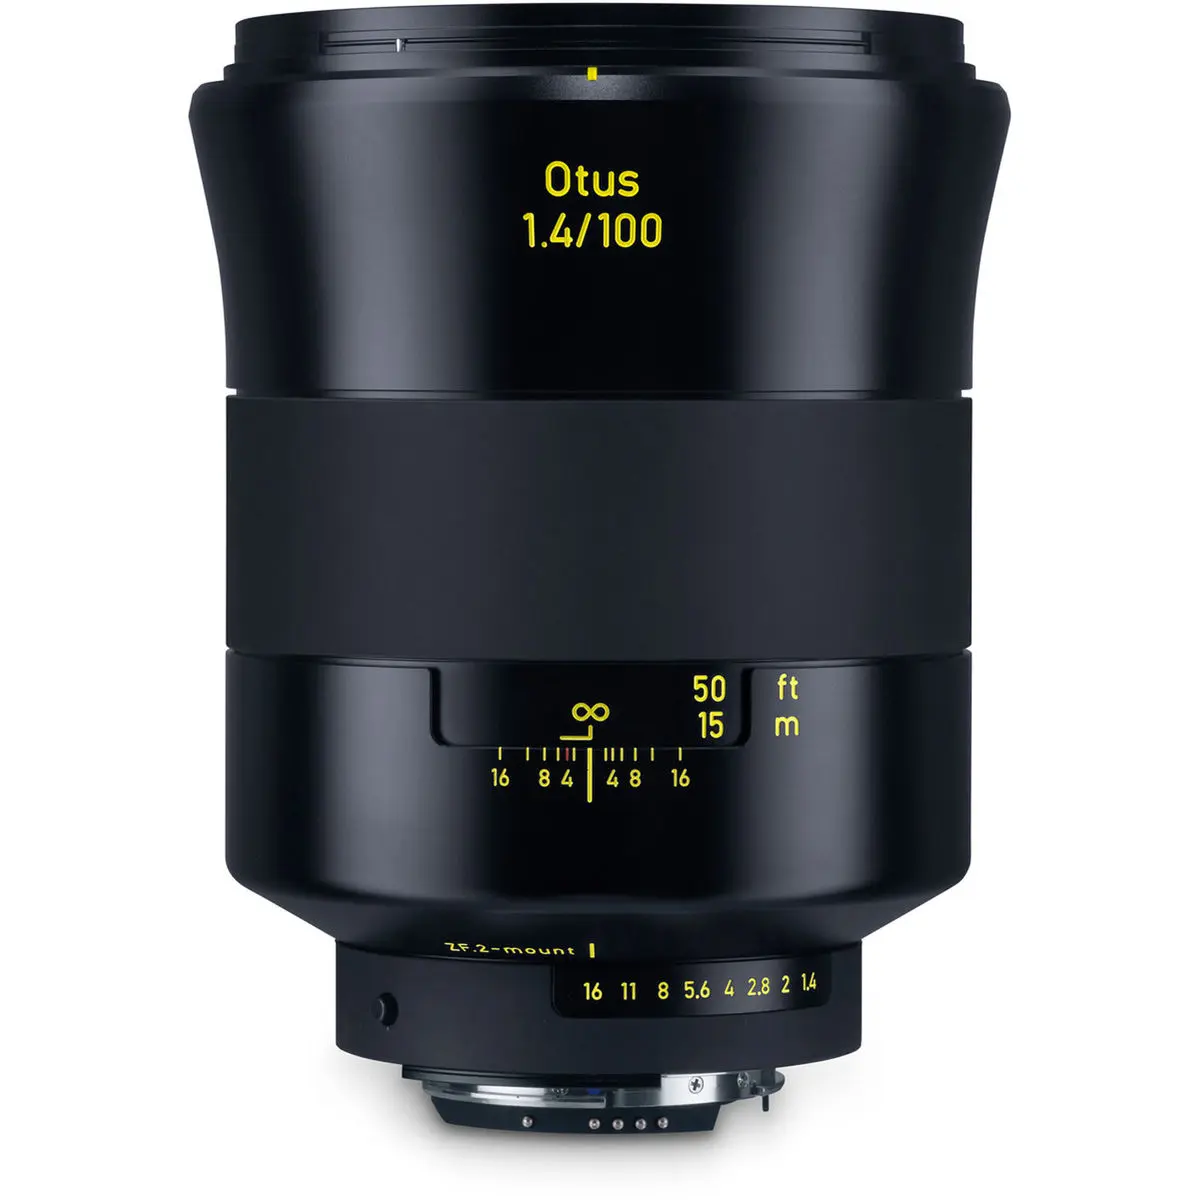 1. Carl Zeiss Otus 1.4/100 ZF.2 (Nikon) Lens